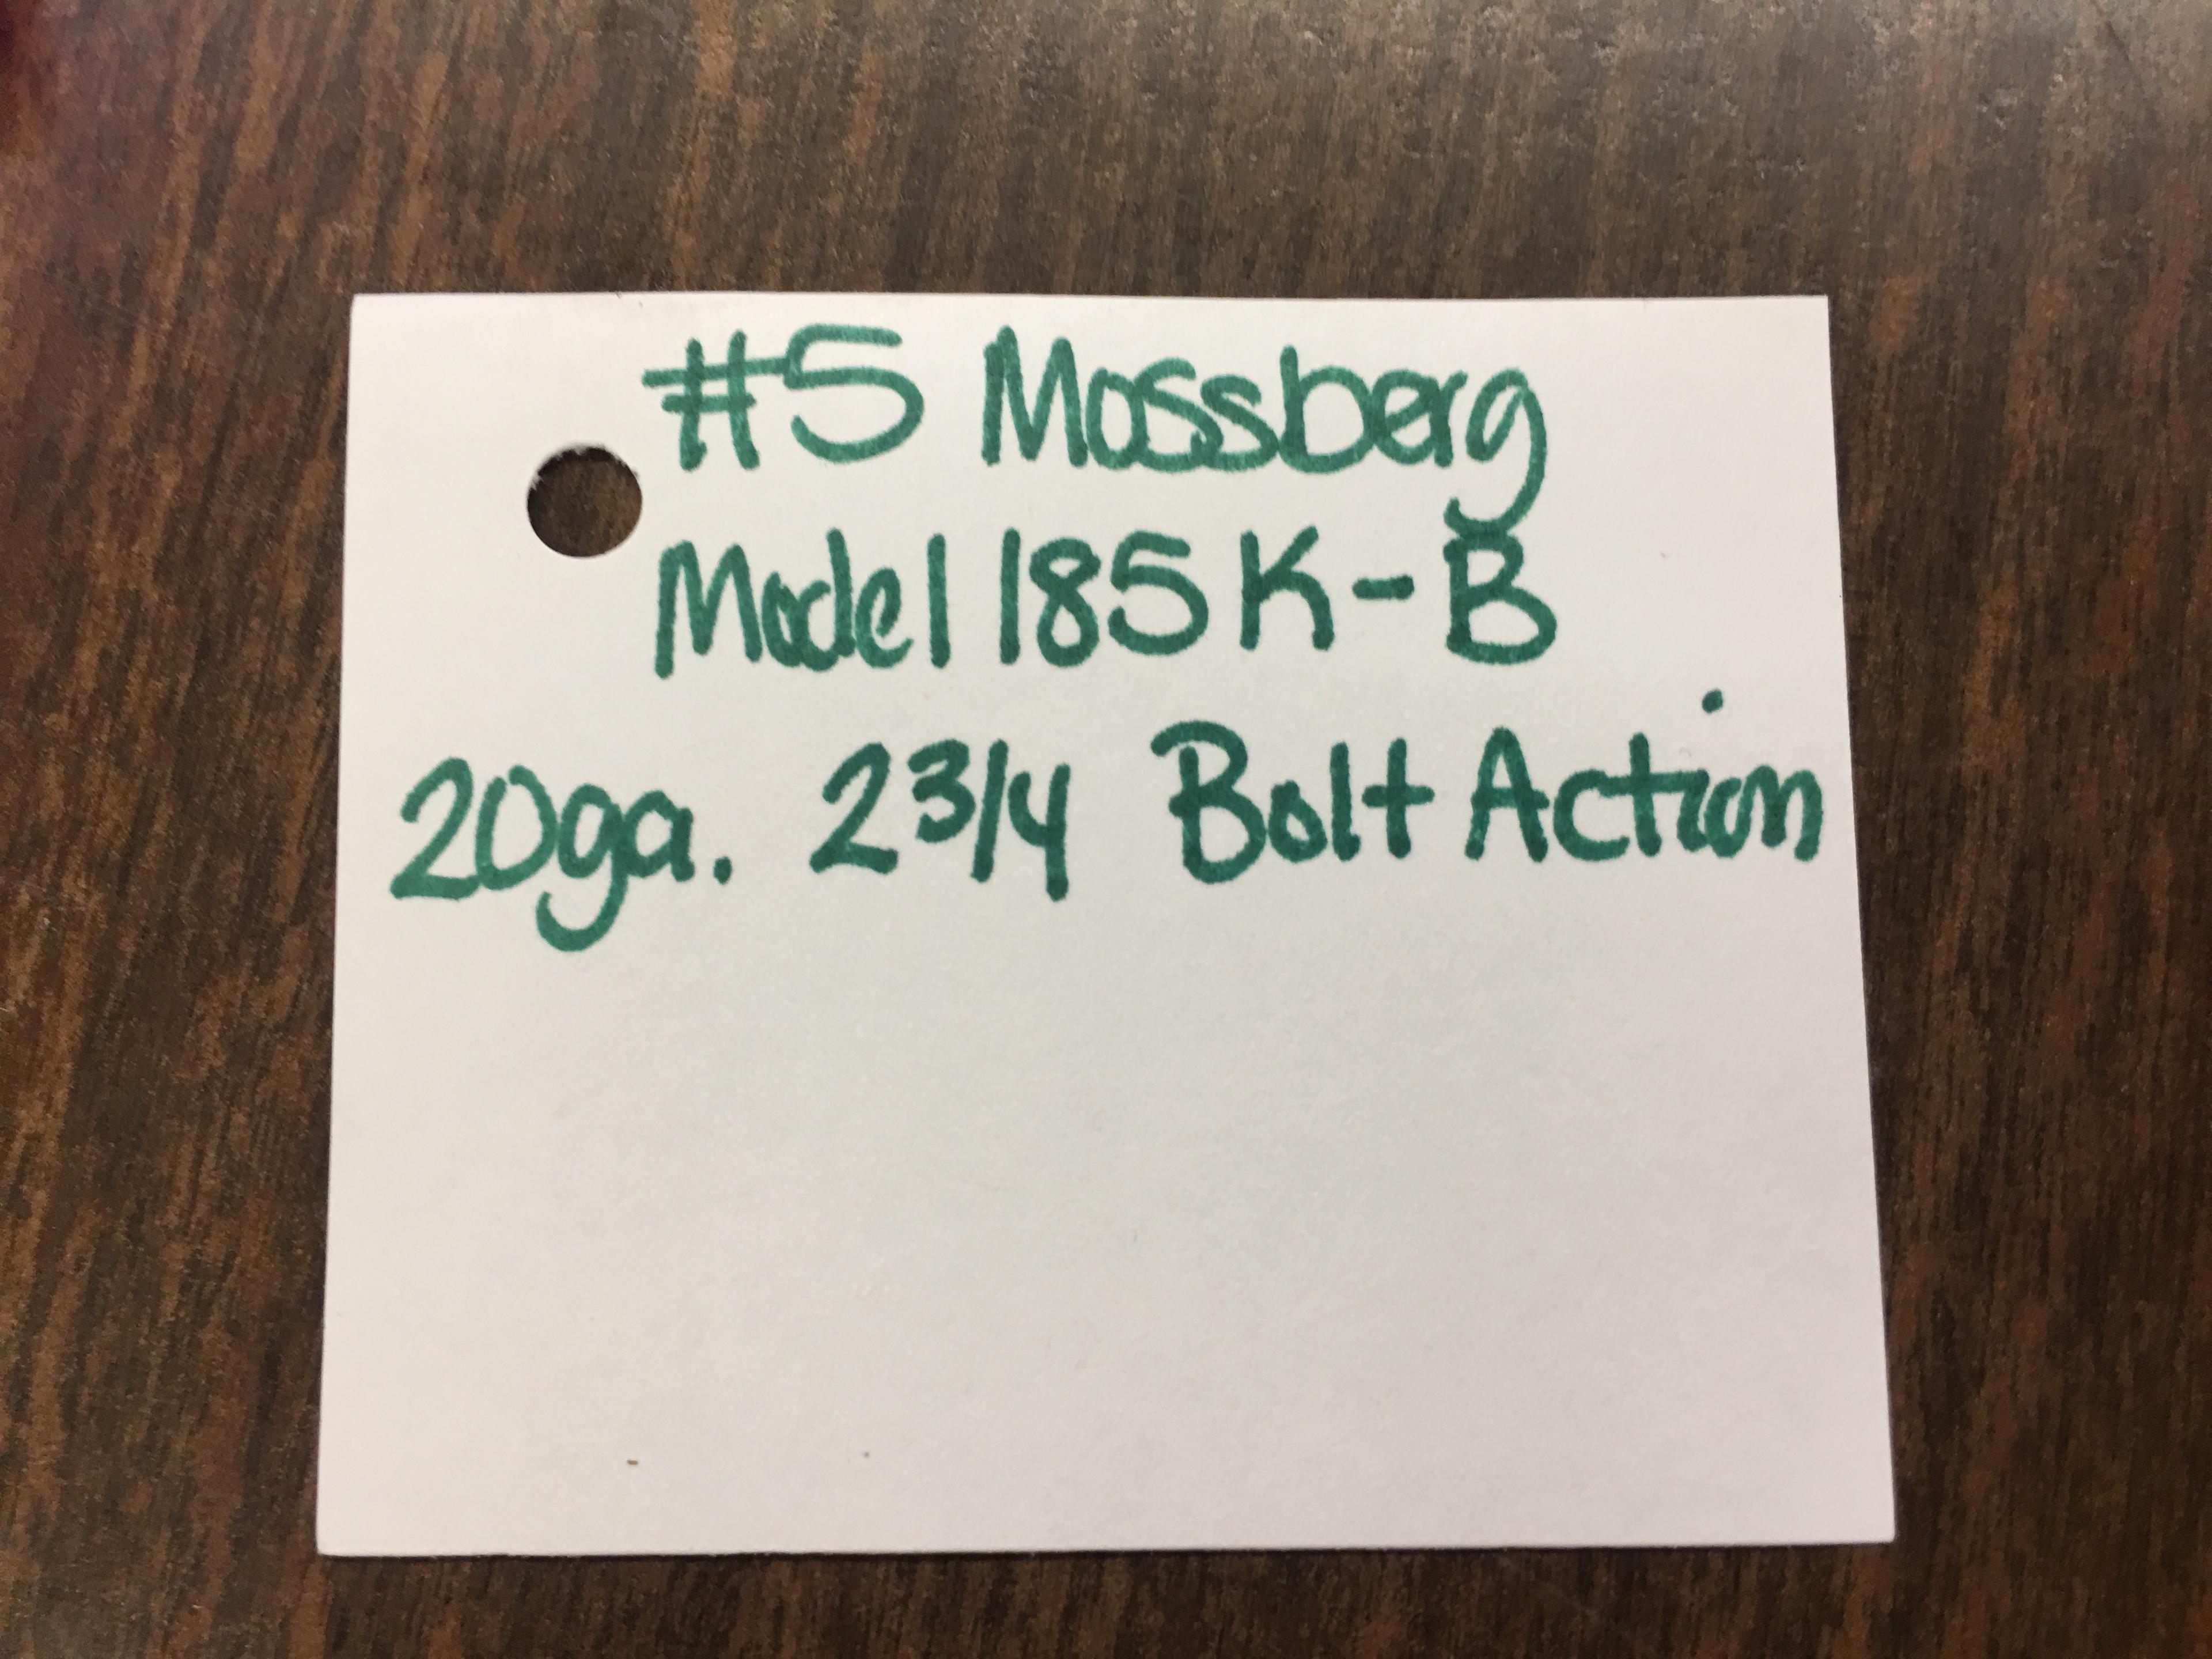 Mossberg Model 185K-B 20 ga.